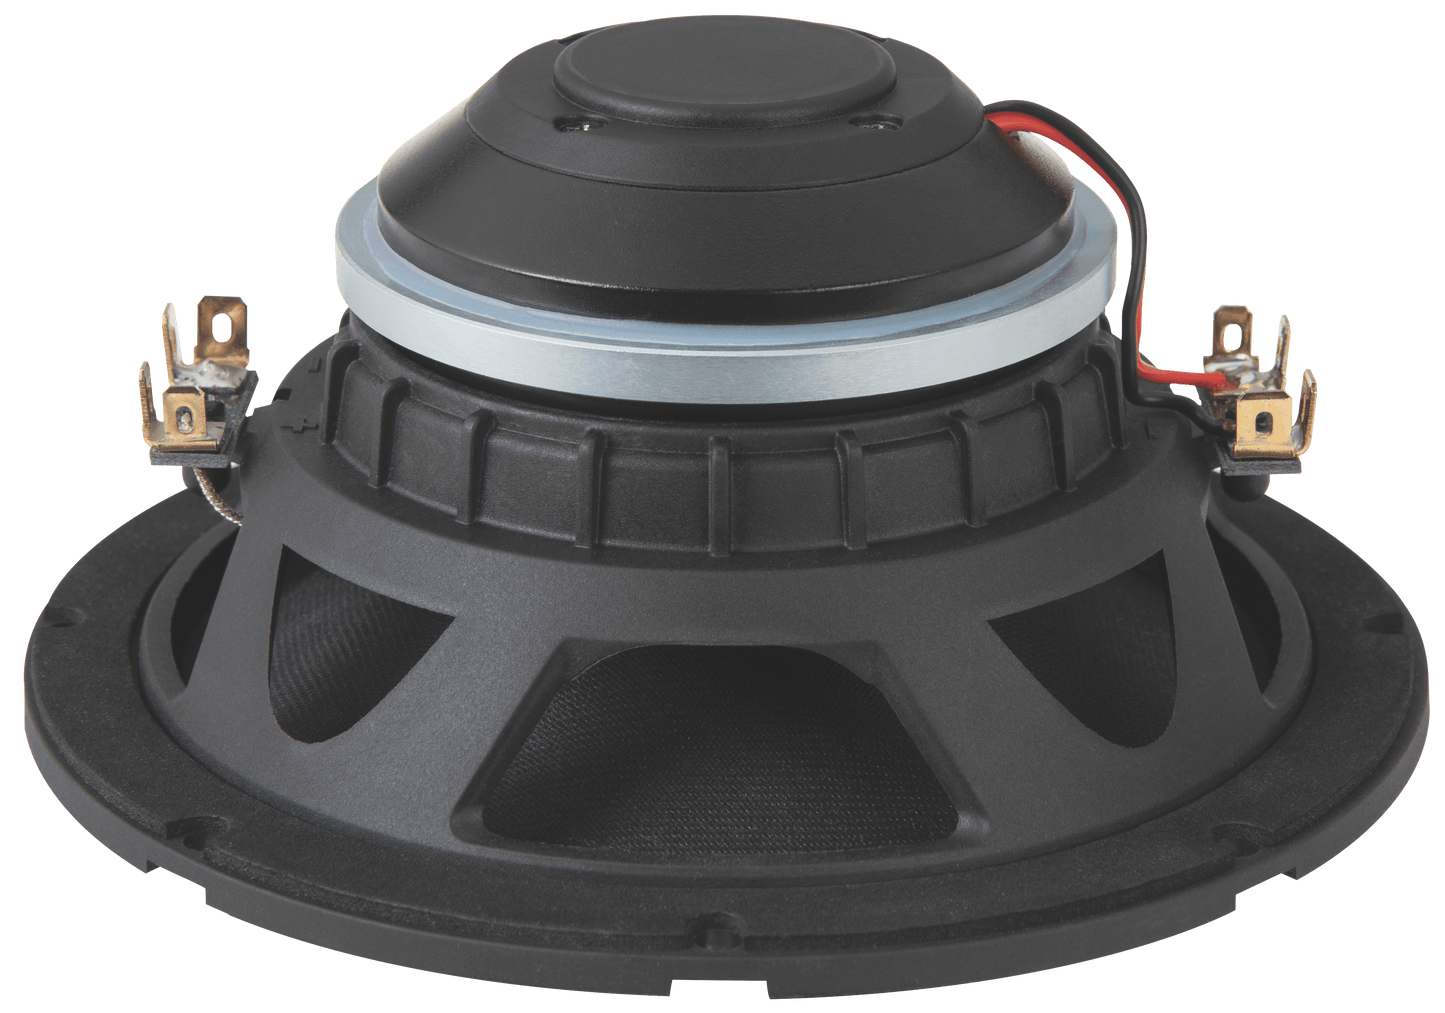 Precision Power MAS.802HT Pro Coaxial Horn Speaker Marine 8" 